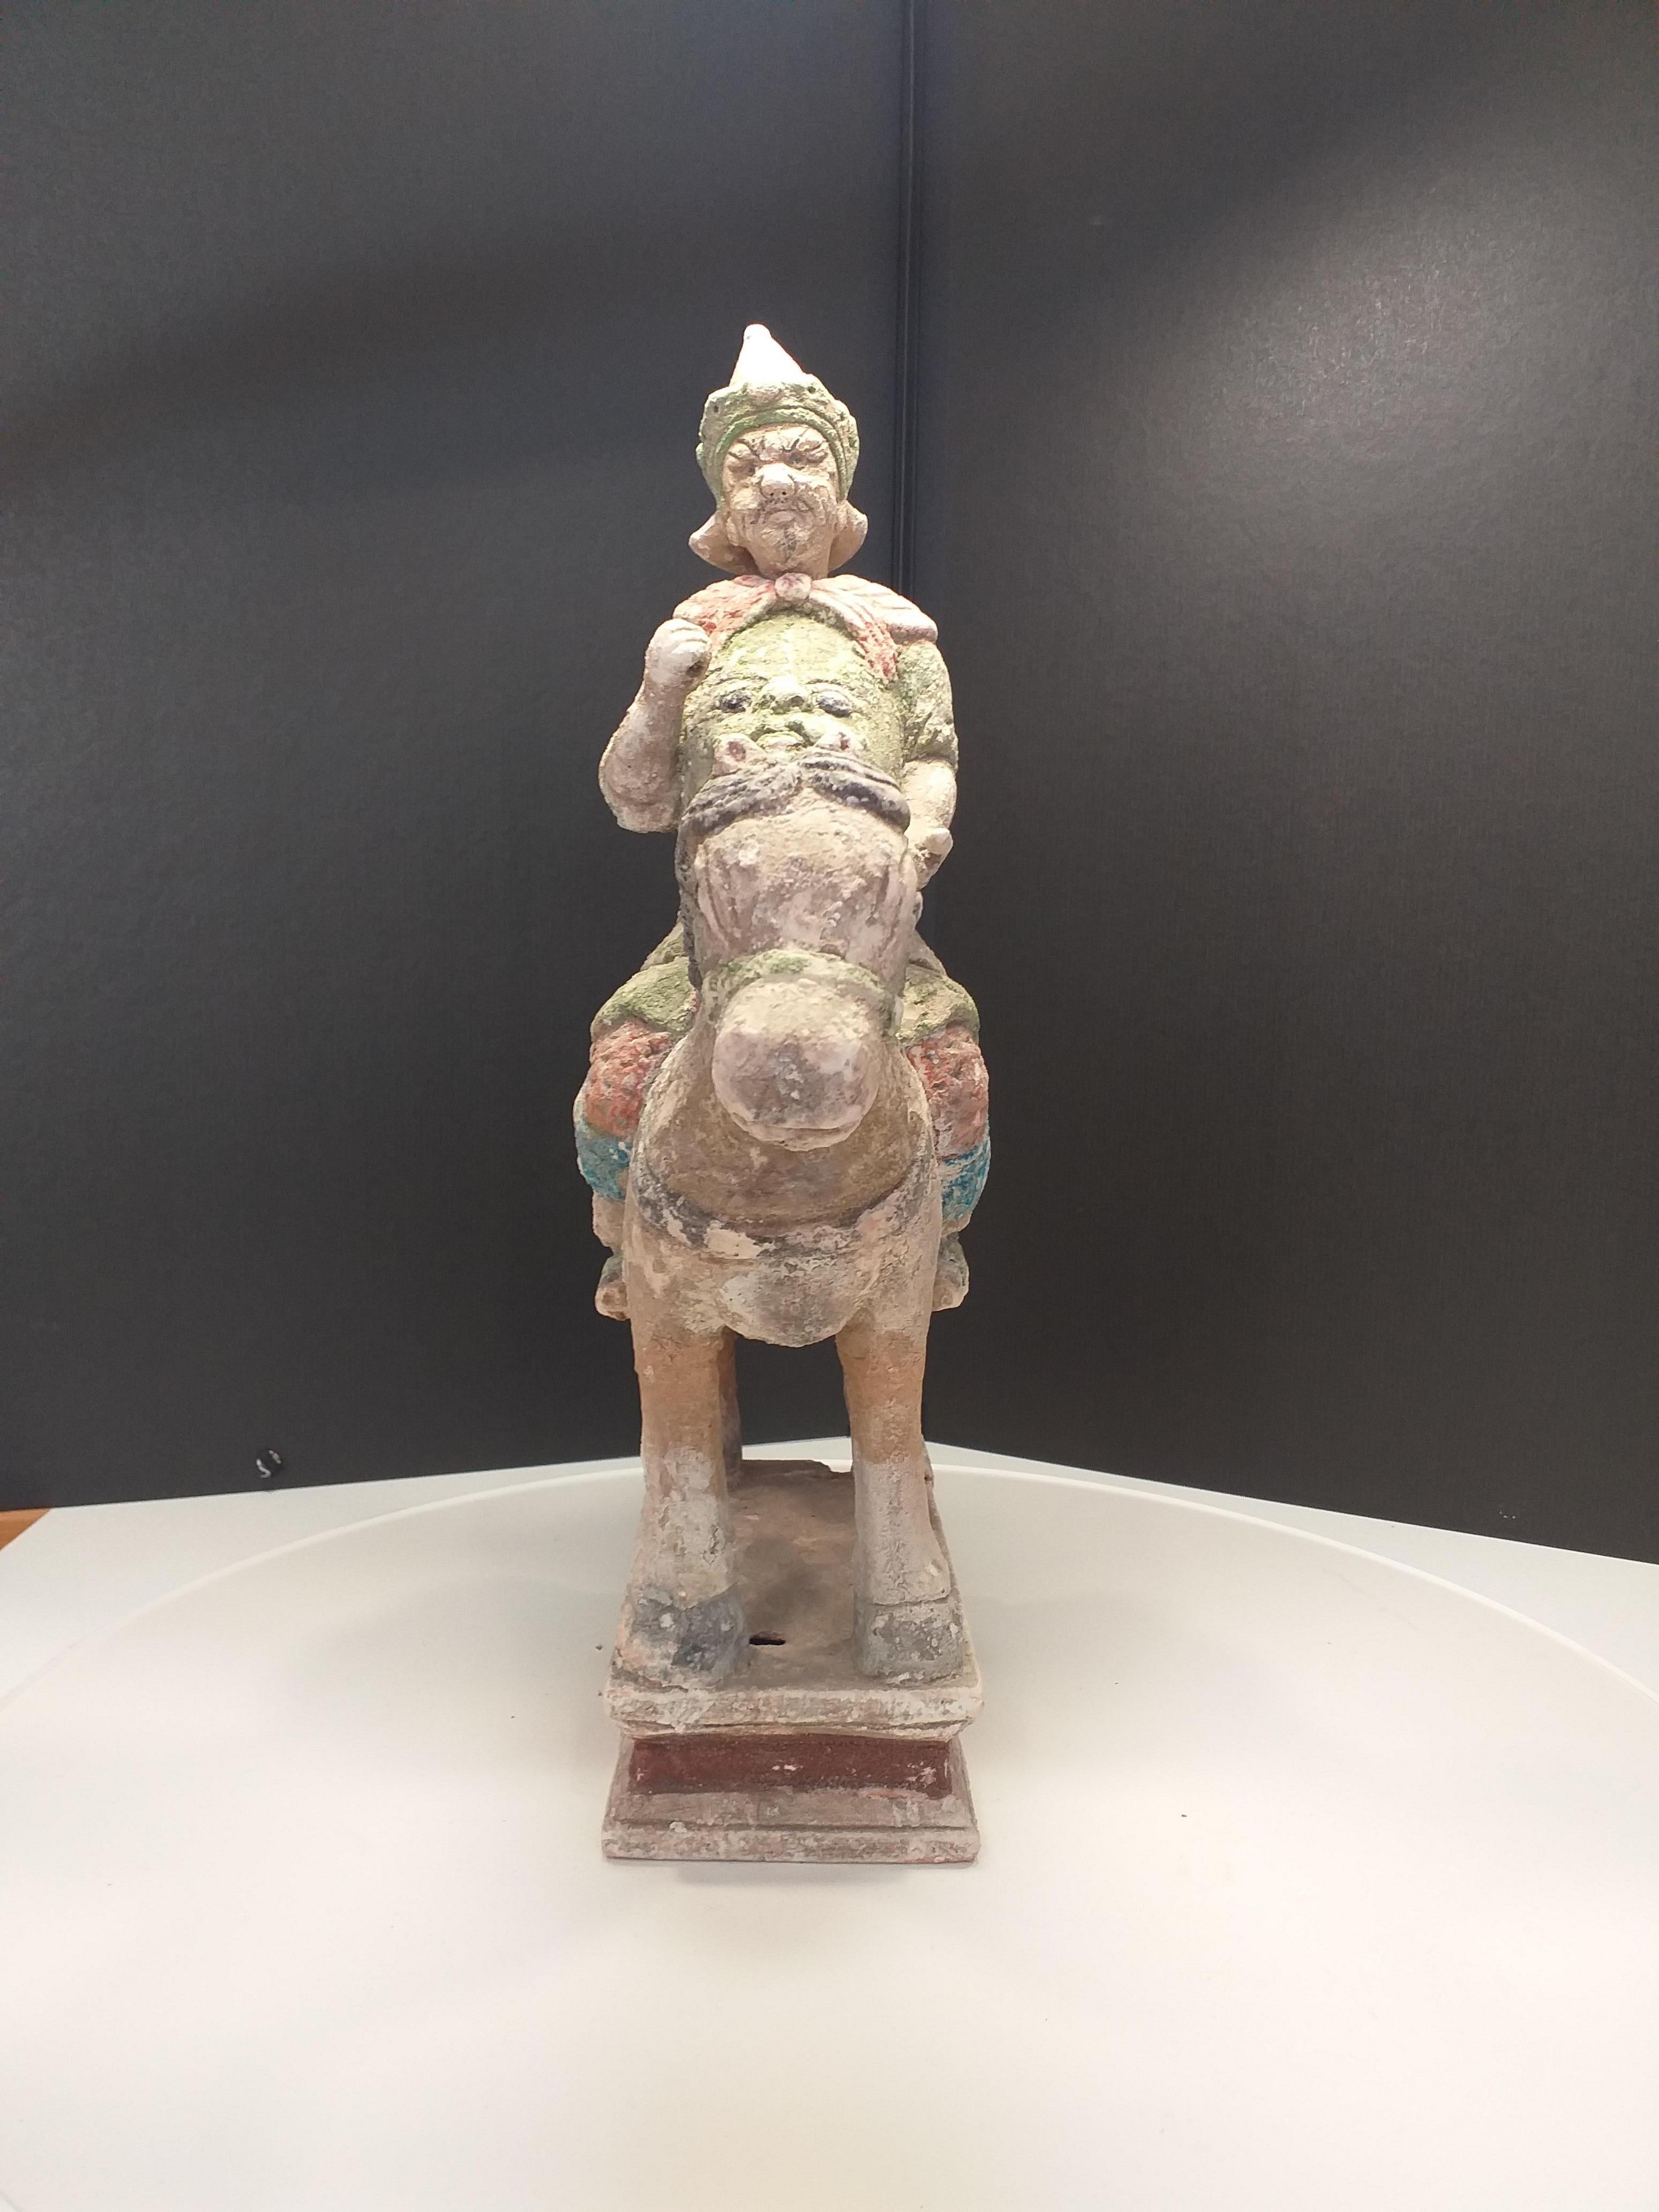 Rider. 
Polychrome terracotta. 
Ming period. 
Removable head. 
H 40cm. L 29cm. W 11cm. 
1400€.